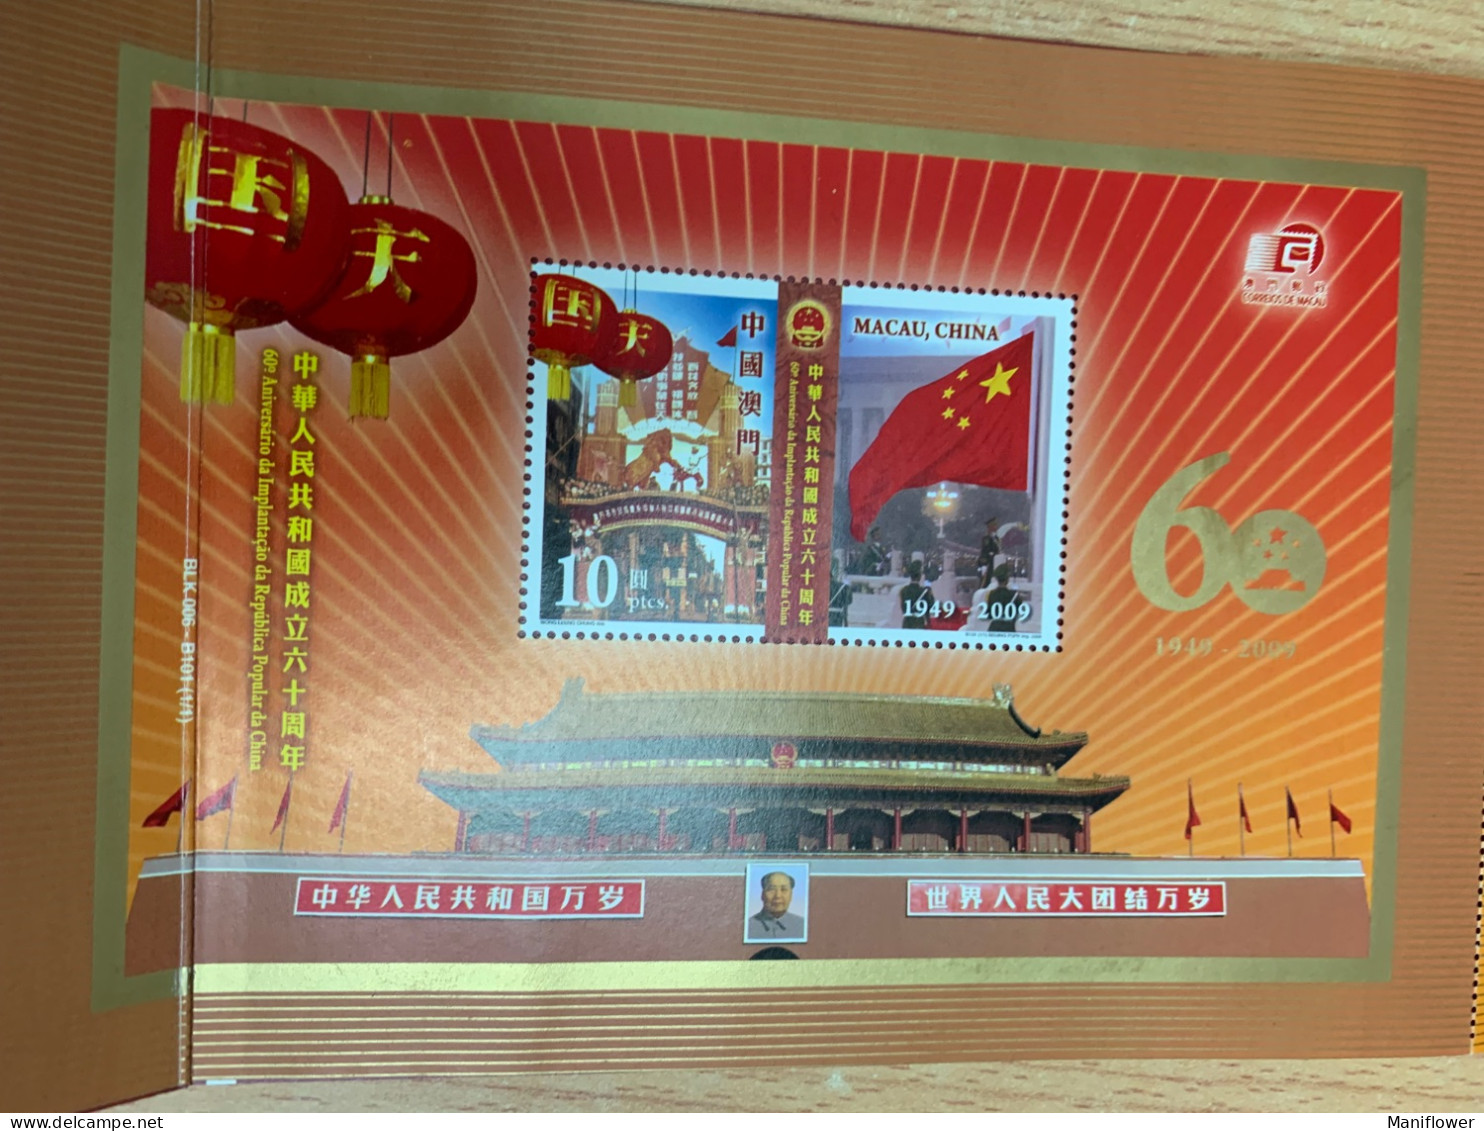 Hong Kong Stamp China Macau Three Regions Flags Emblem Folder MNH 2009 Temple - Nuovi